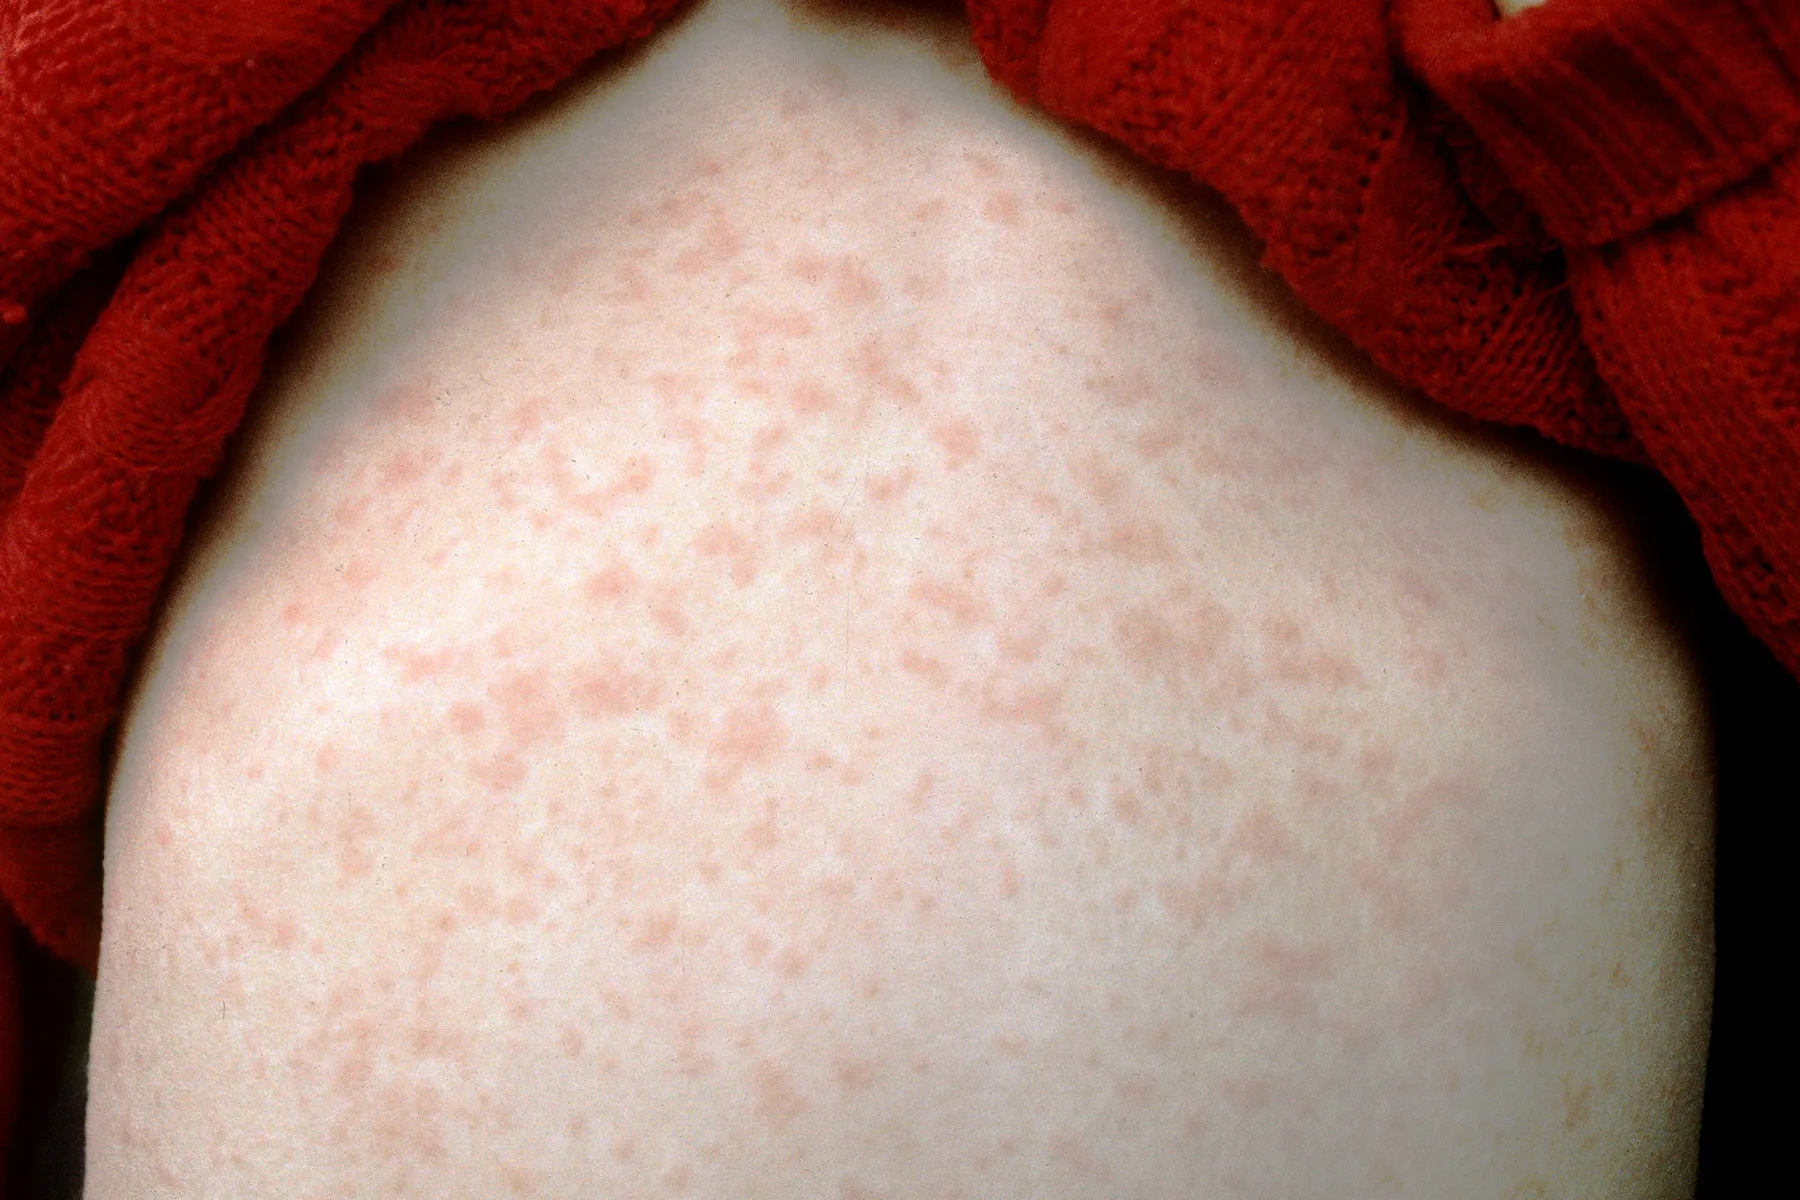 photo of measles rash